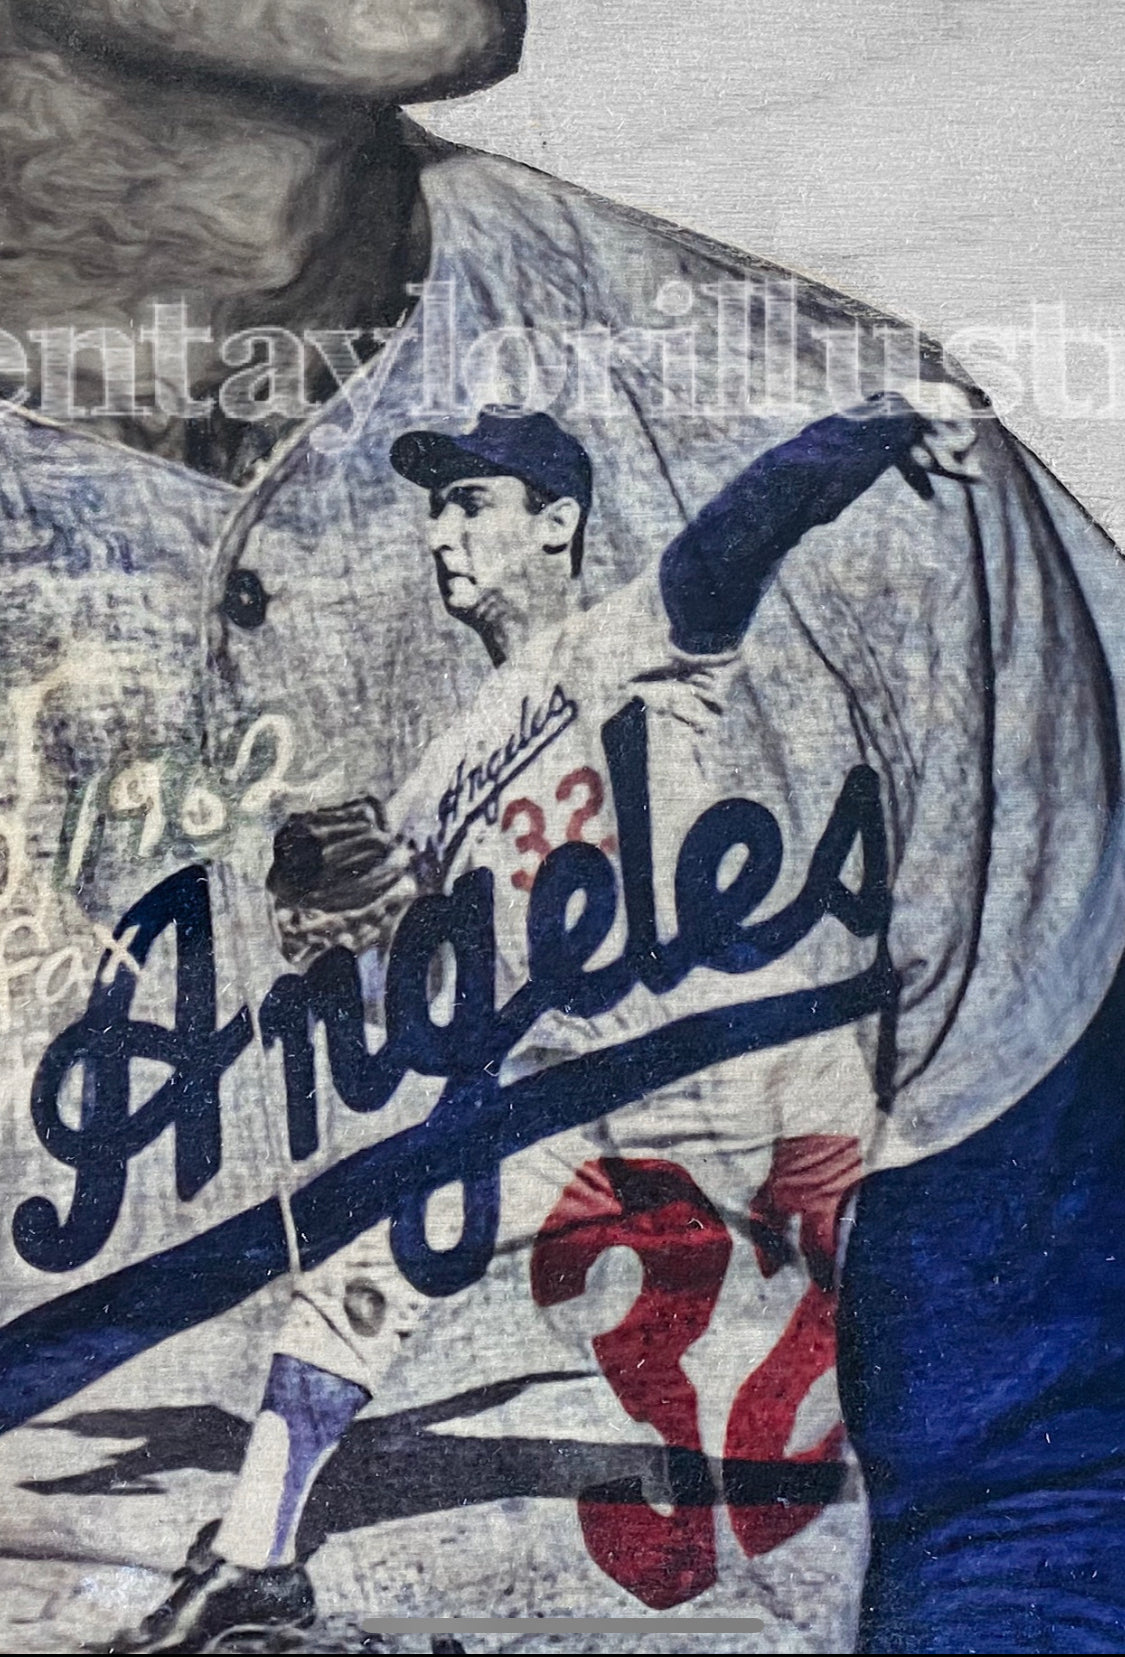 Sandy Koufax Poster Photo LA Angeles Dodgers Baseball Photos Posters 11x14